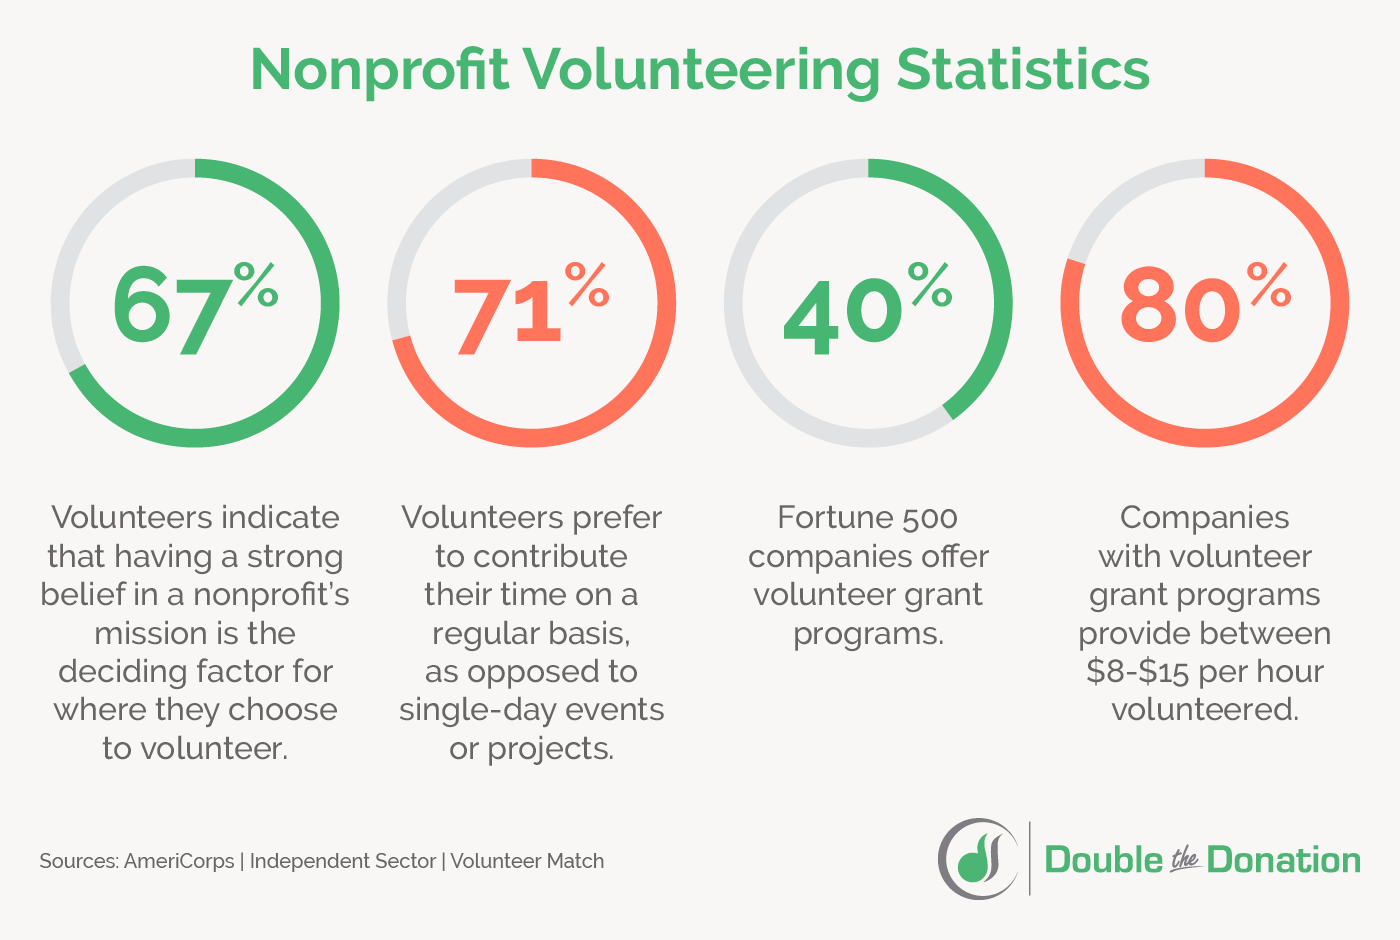 This infographic illustrates a few key nonprofit volunteering statistics explored below.